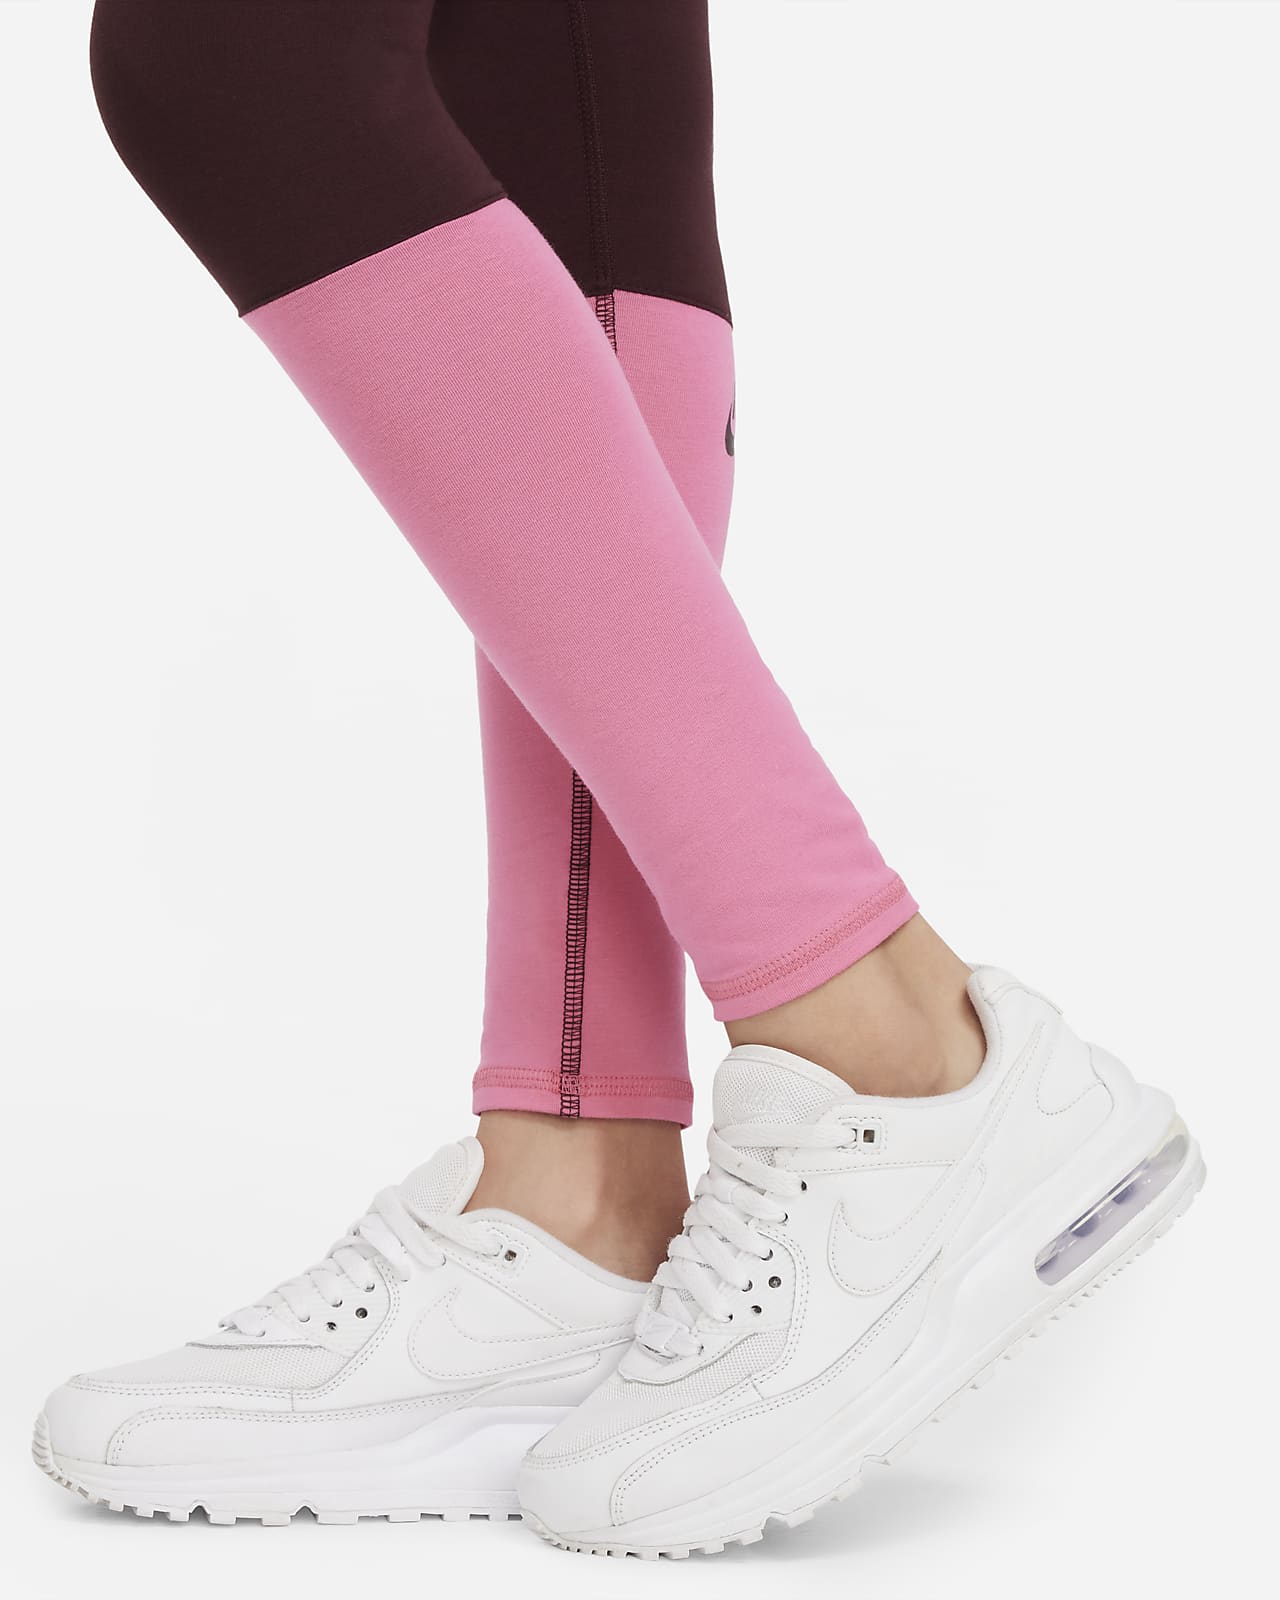 Nike Sportswear Favorites Big Kids' (Girls') High-Waisted Dance Leggings